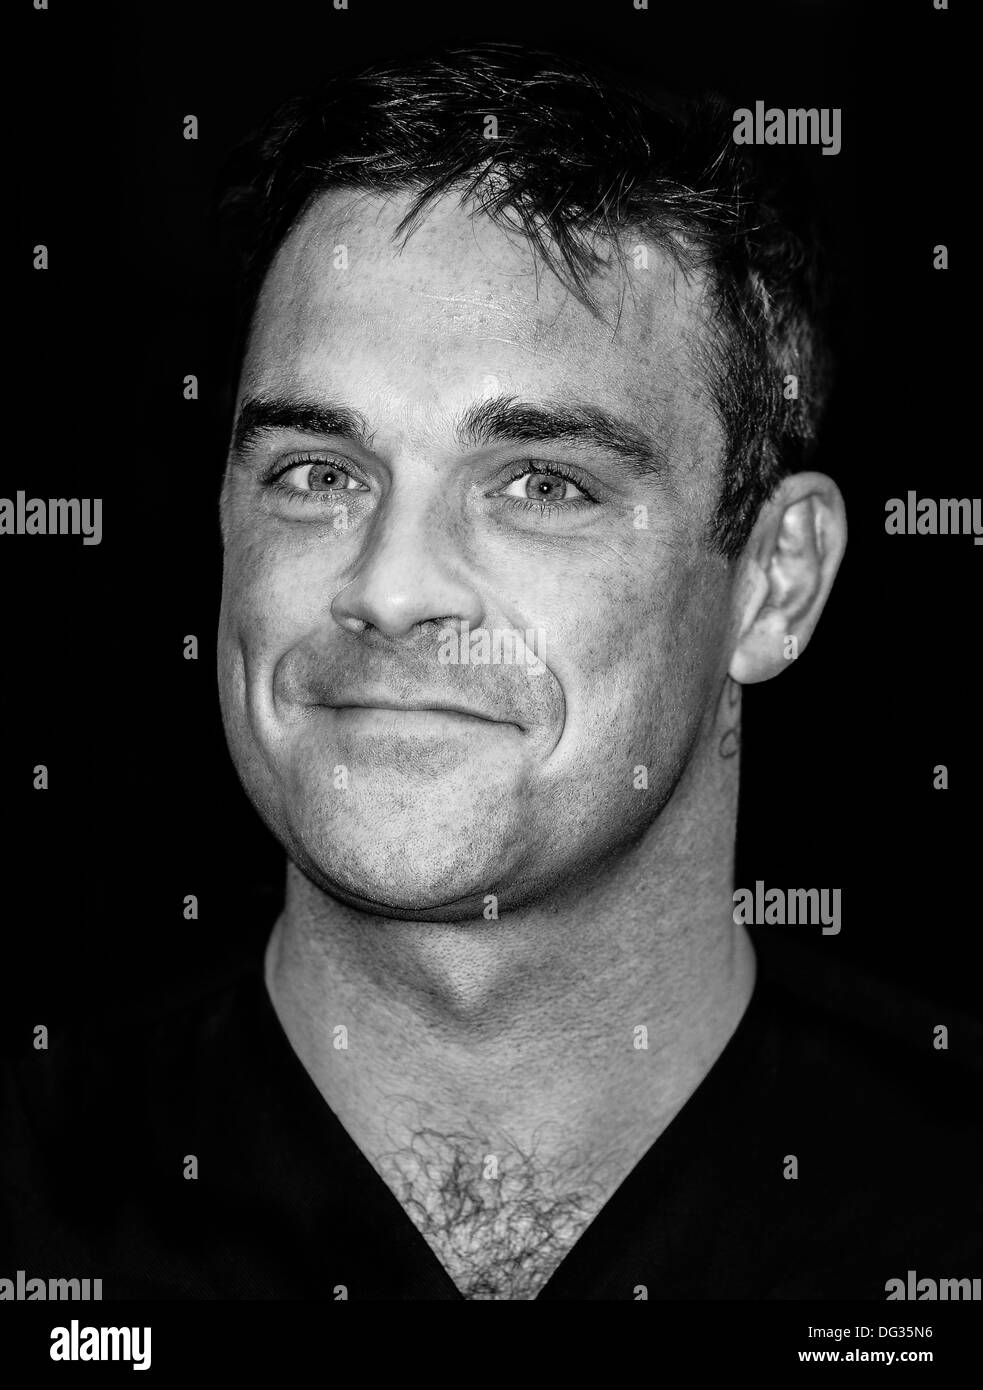 Robbie Williams black and white portrait Stock Photo